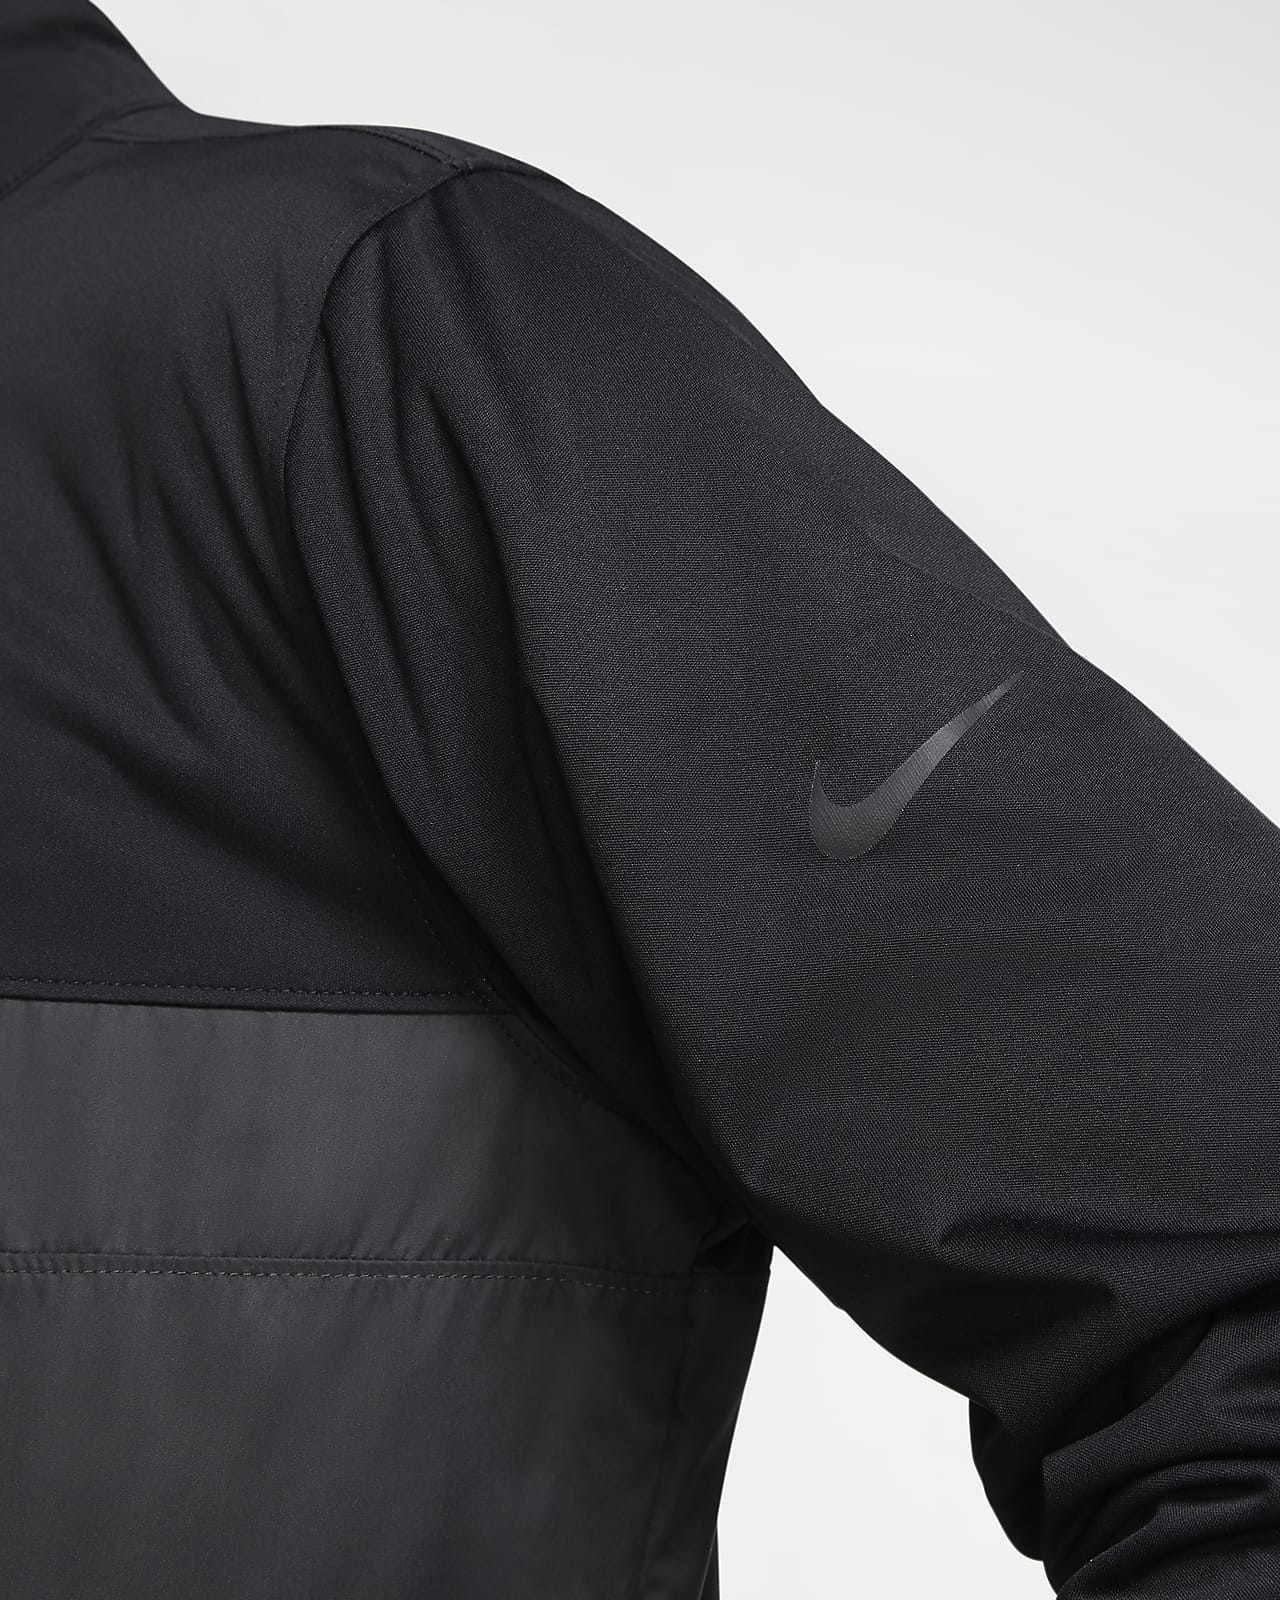 Nike公式 ナイキ シールド ビクトリー メンズ 1 2ジップ ゴルフジャケット オンラインストア 通販サイト